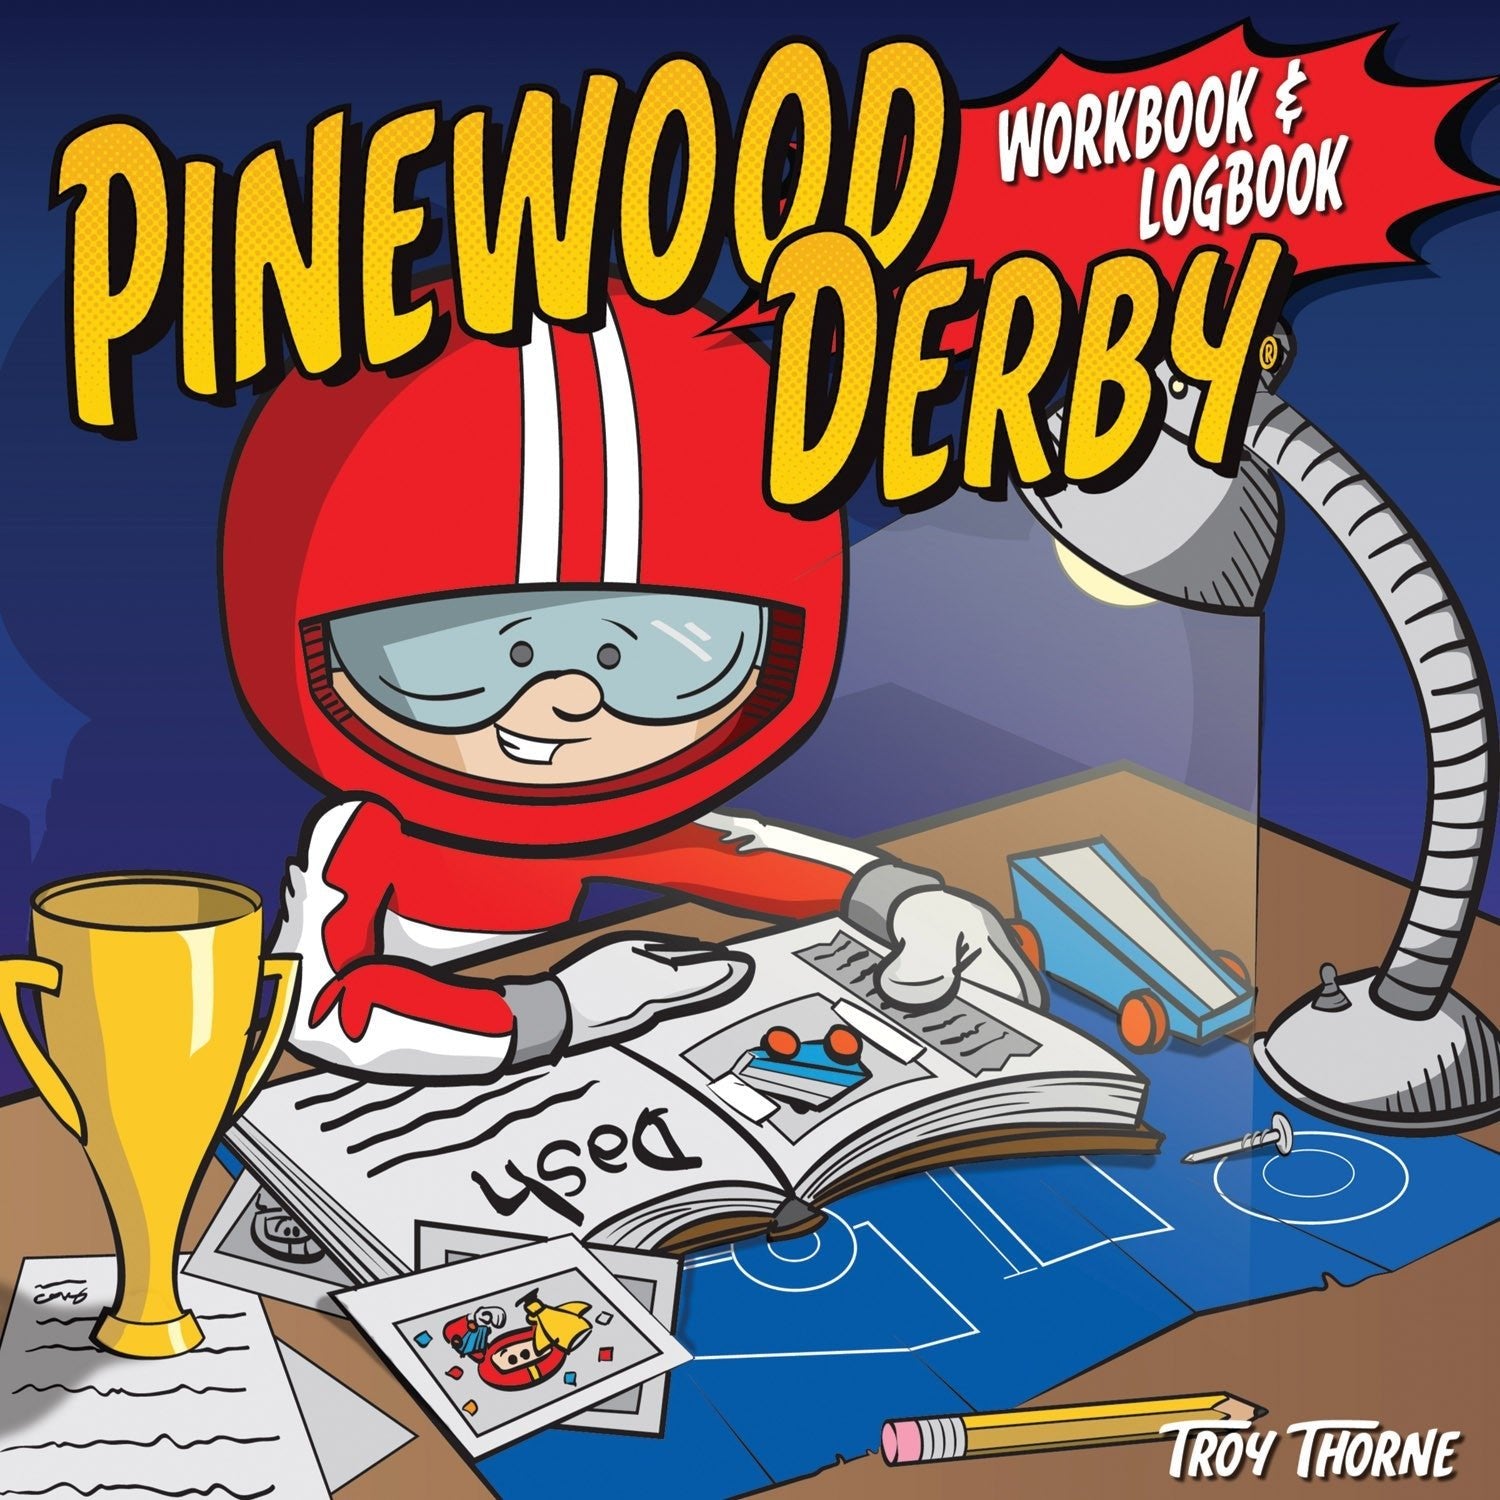 Pinewood Derby Workbook & Logbook, by Troy Thorne